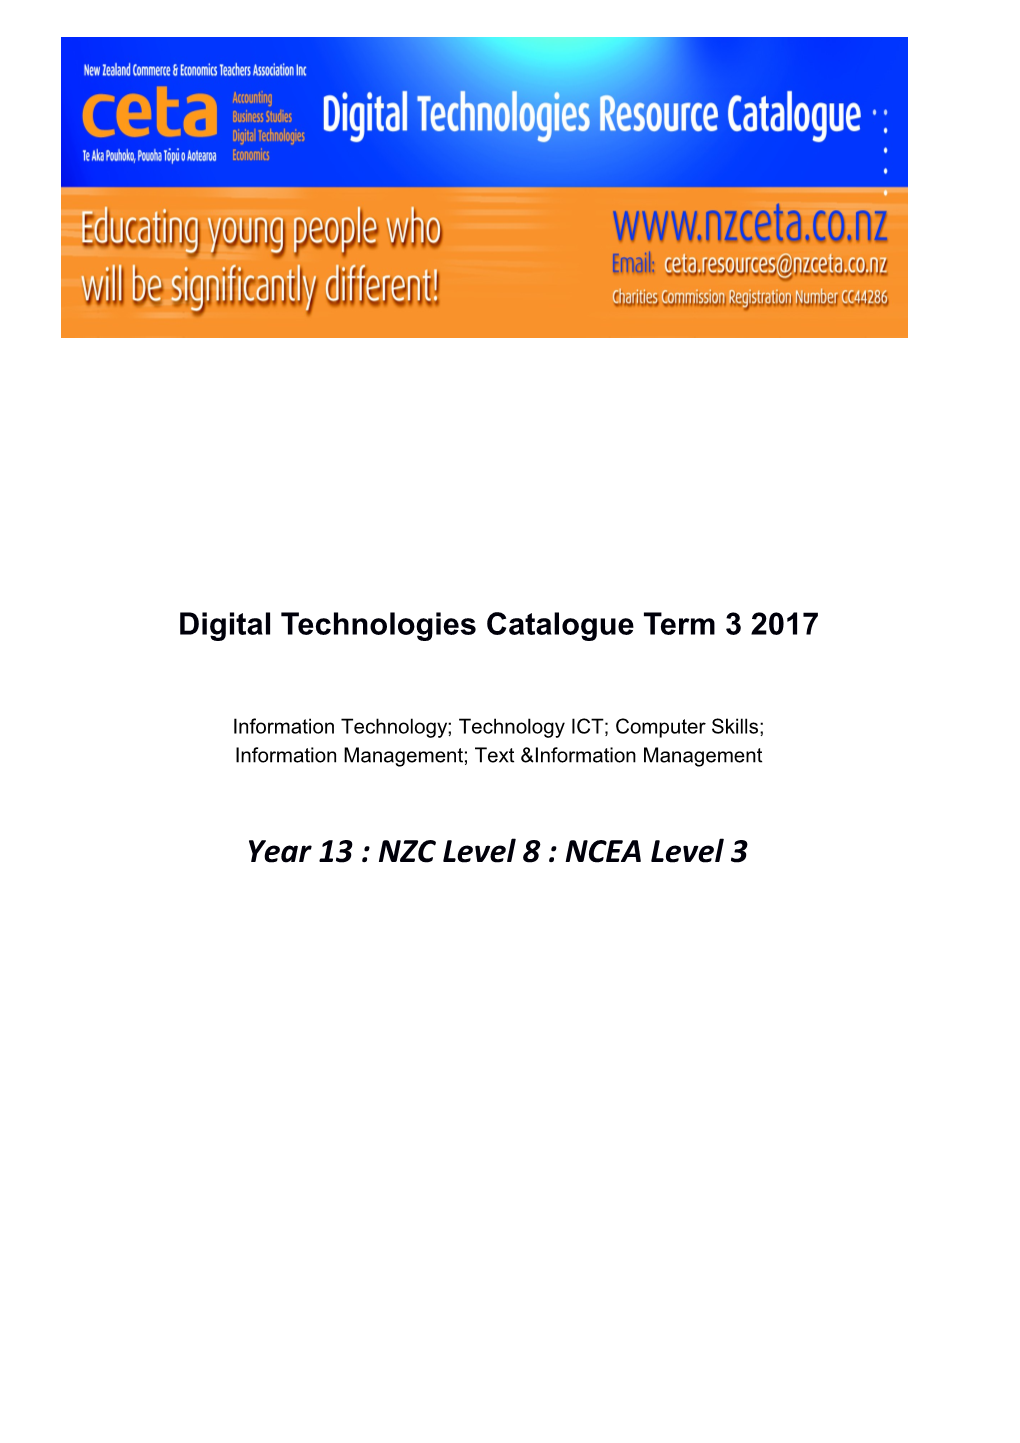 Digital Technologies Catalogue Term 3 2017